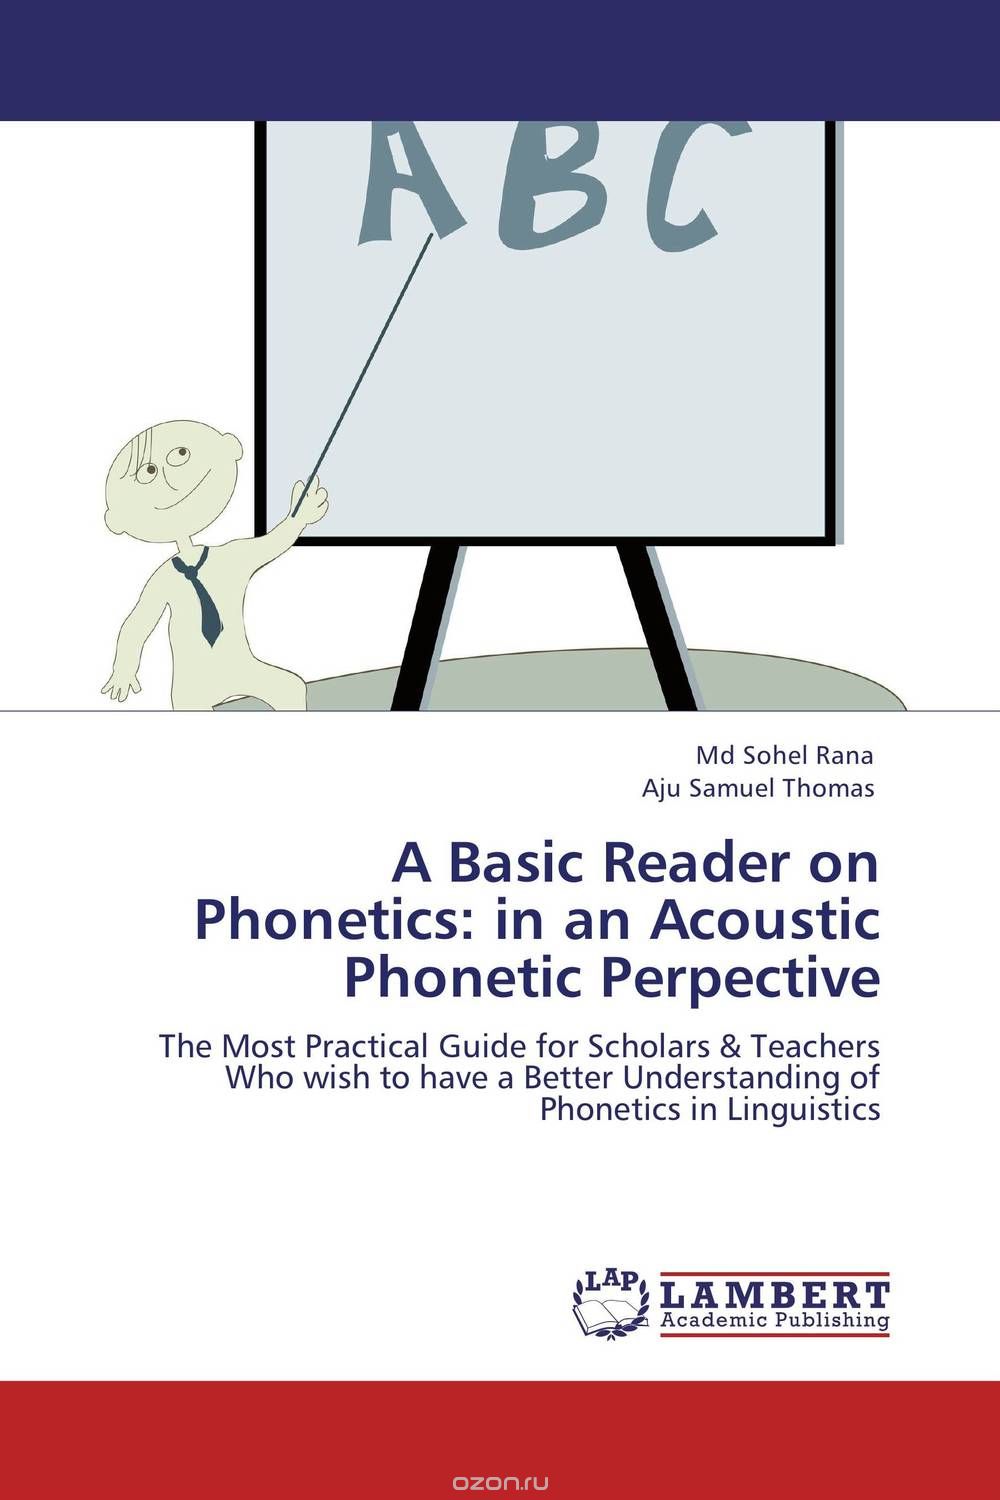 Скачать книгу "A Basic Reader on Phonetics: in an Acoustic Phonetic Perpective"